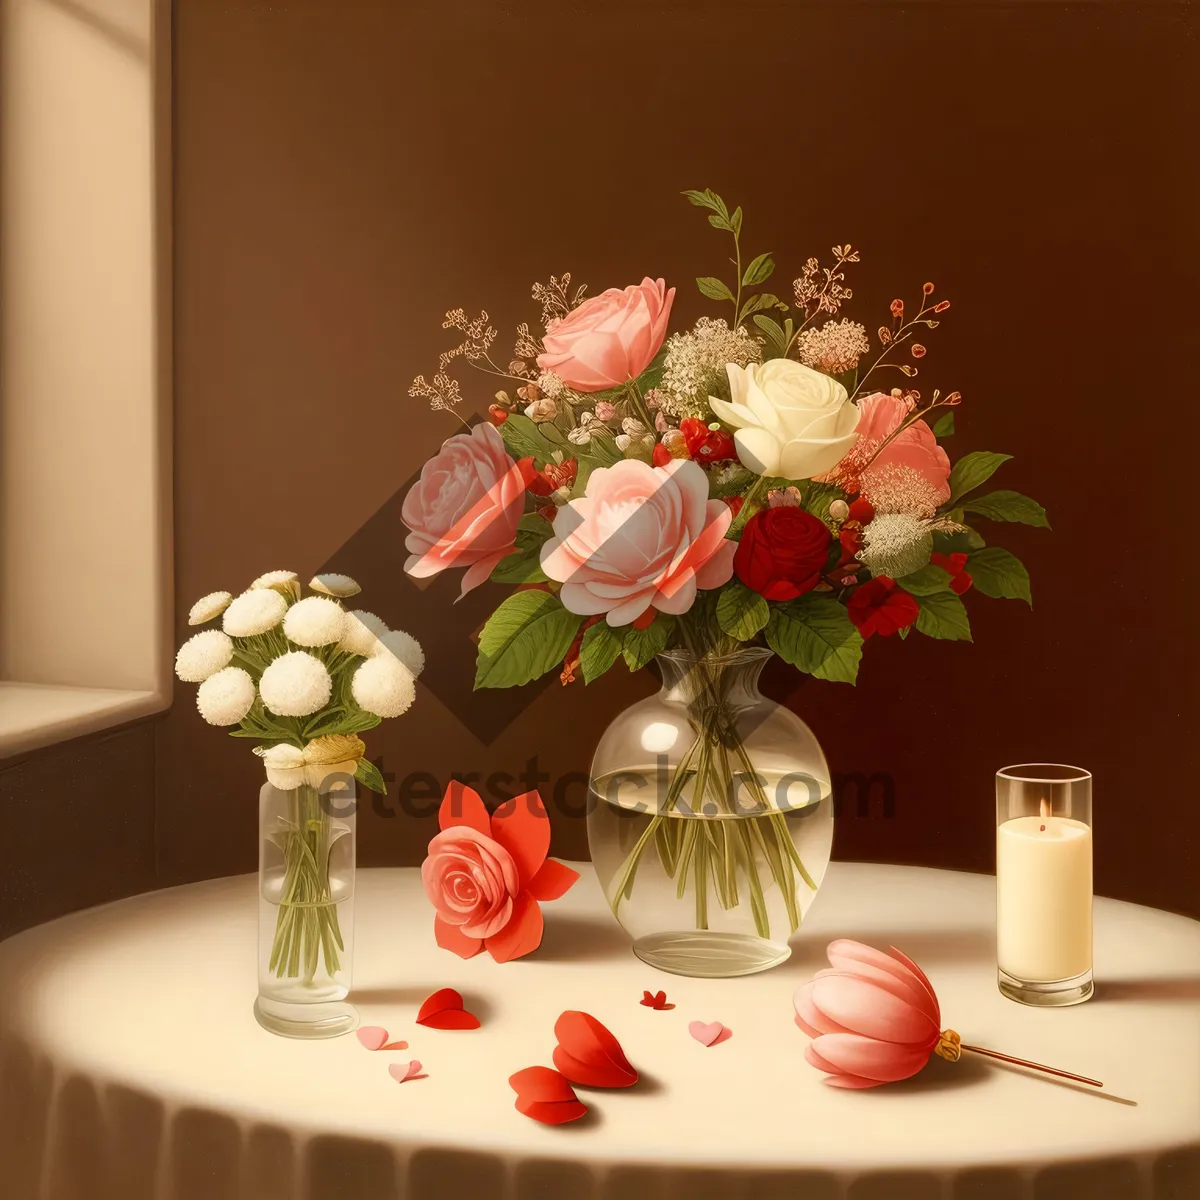 Picture of Romantic Wedding Tabletop Floral Arrangement